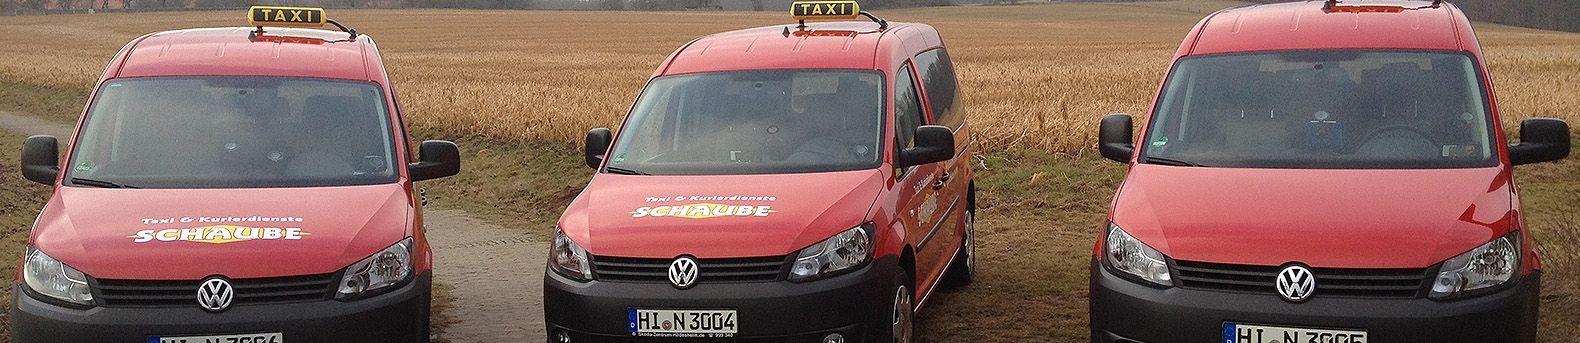 taxi-hildesheim-schaube-header taxiautos